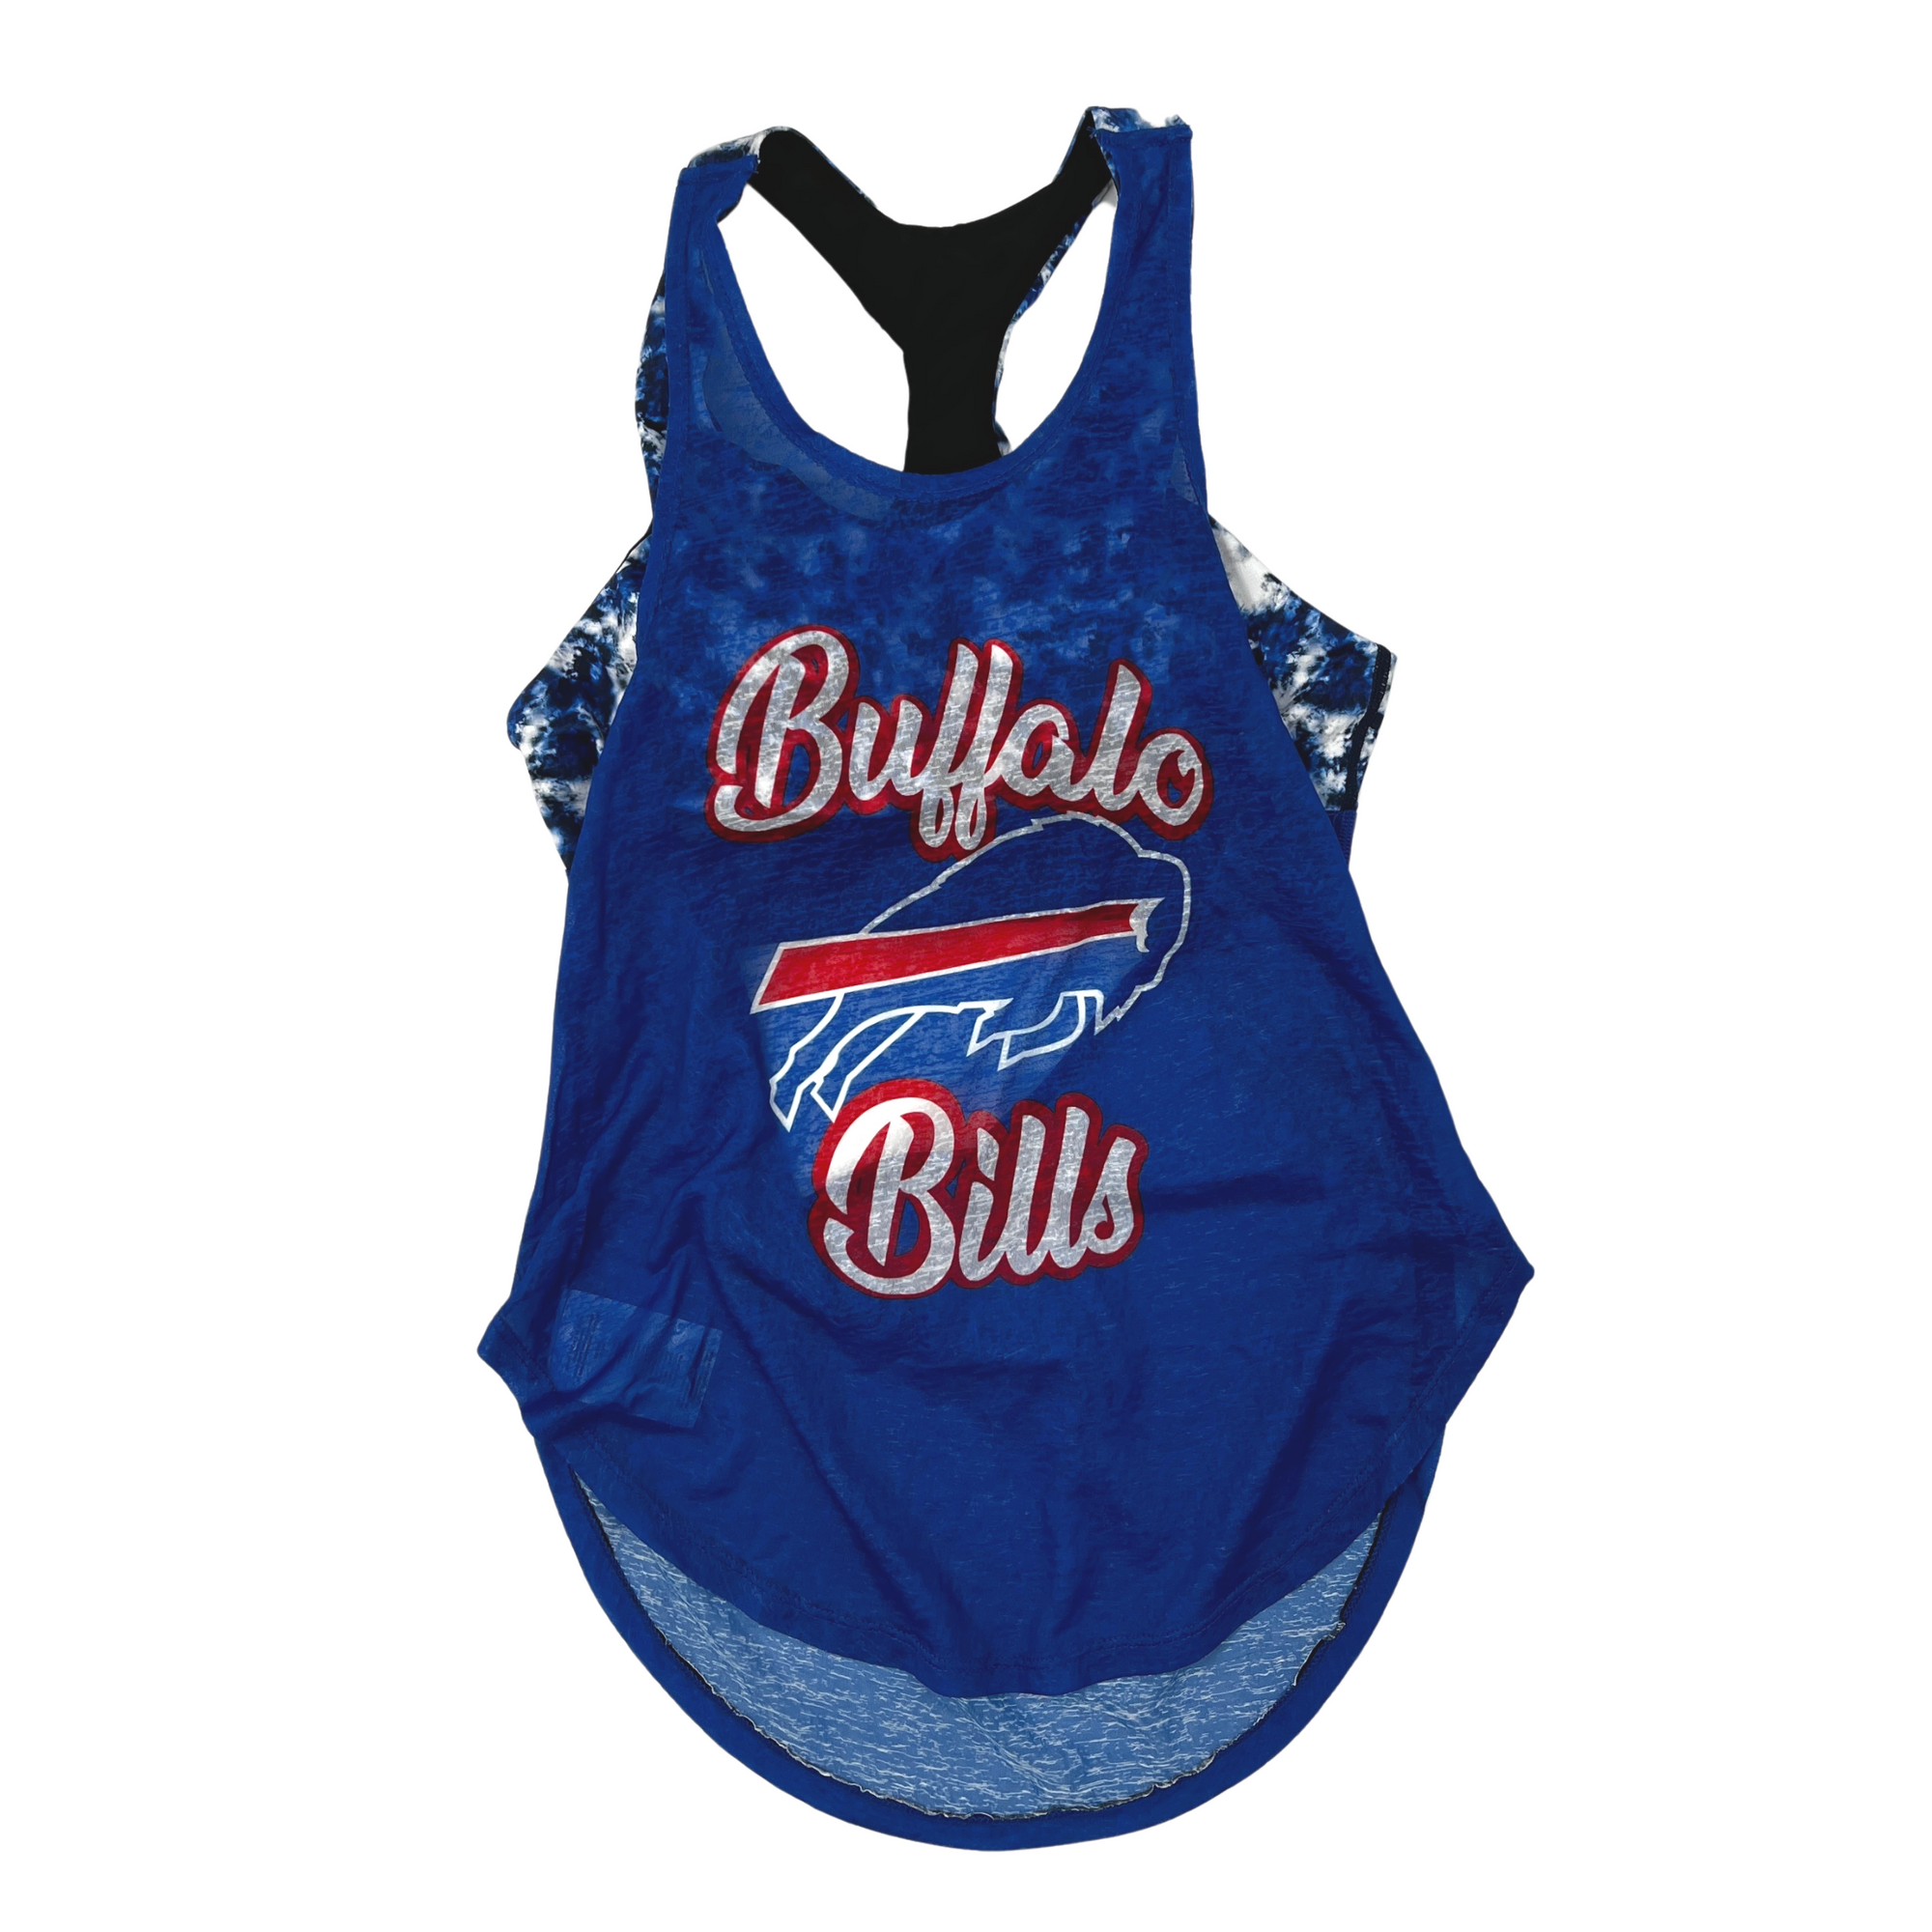 Women's Buffalo Bills Royal Tie Dye Sports Bra With Top